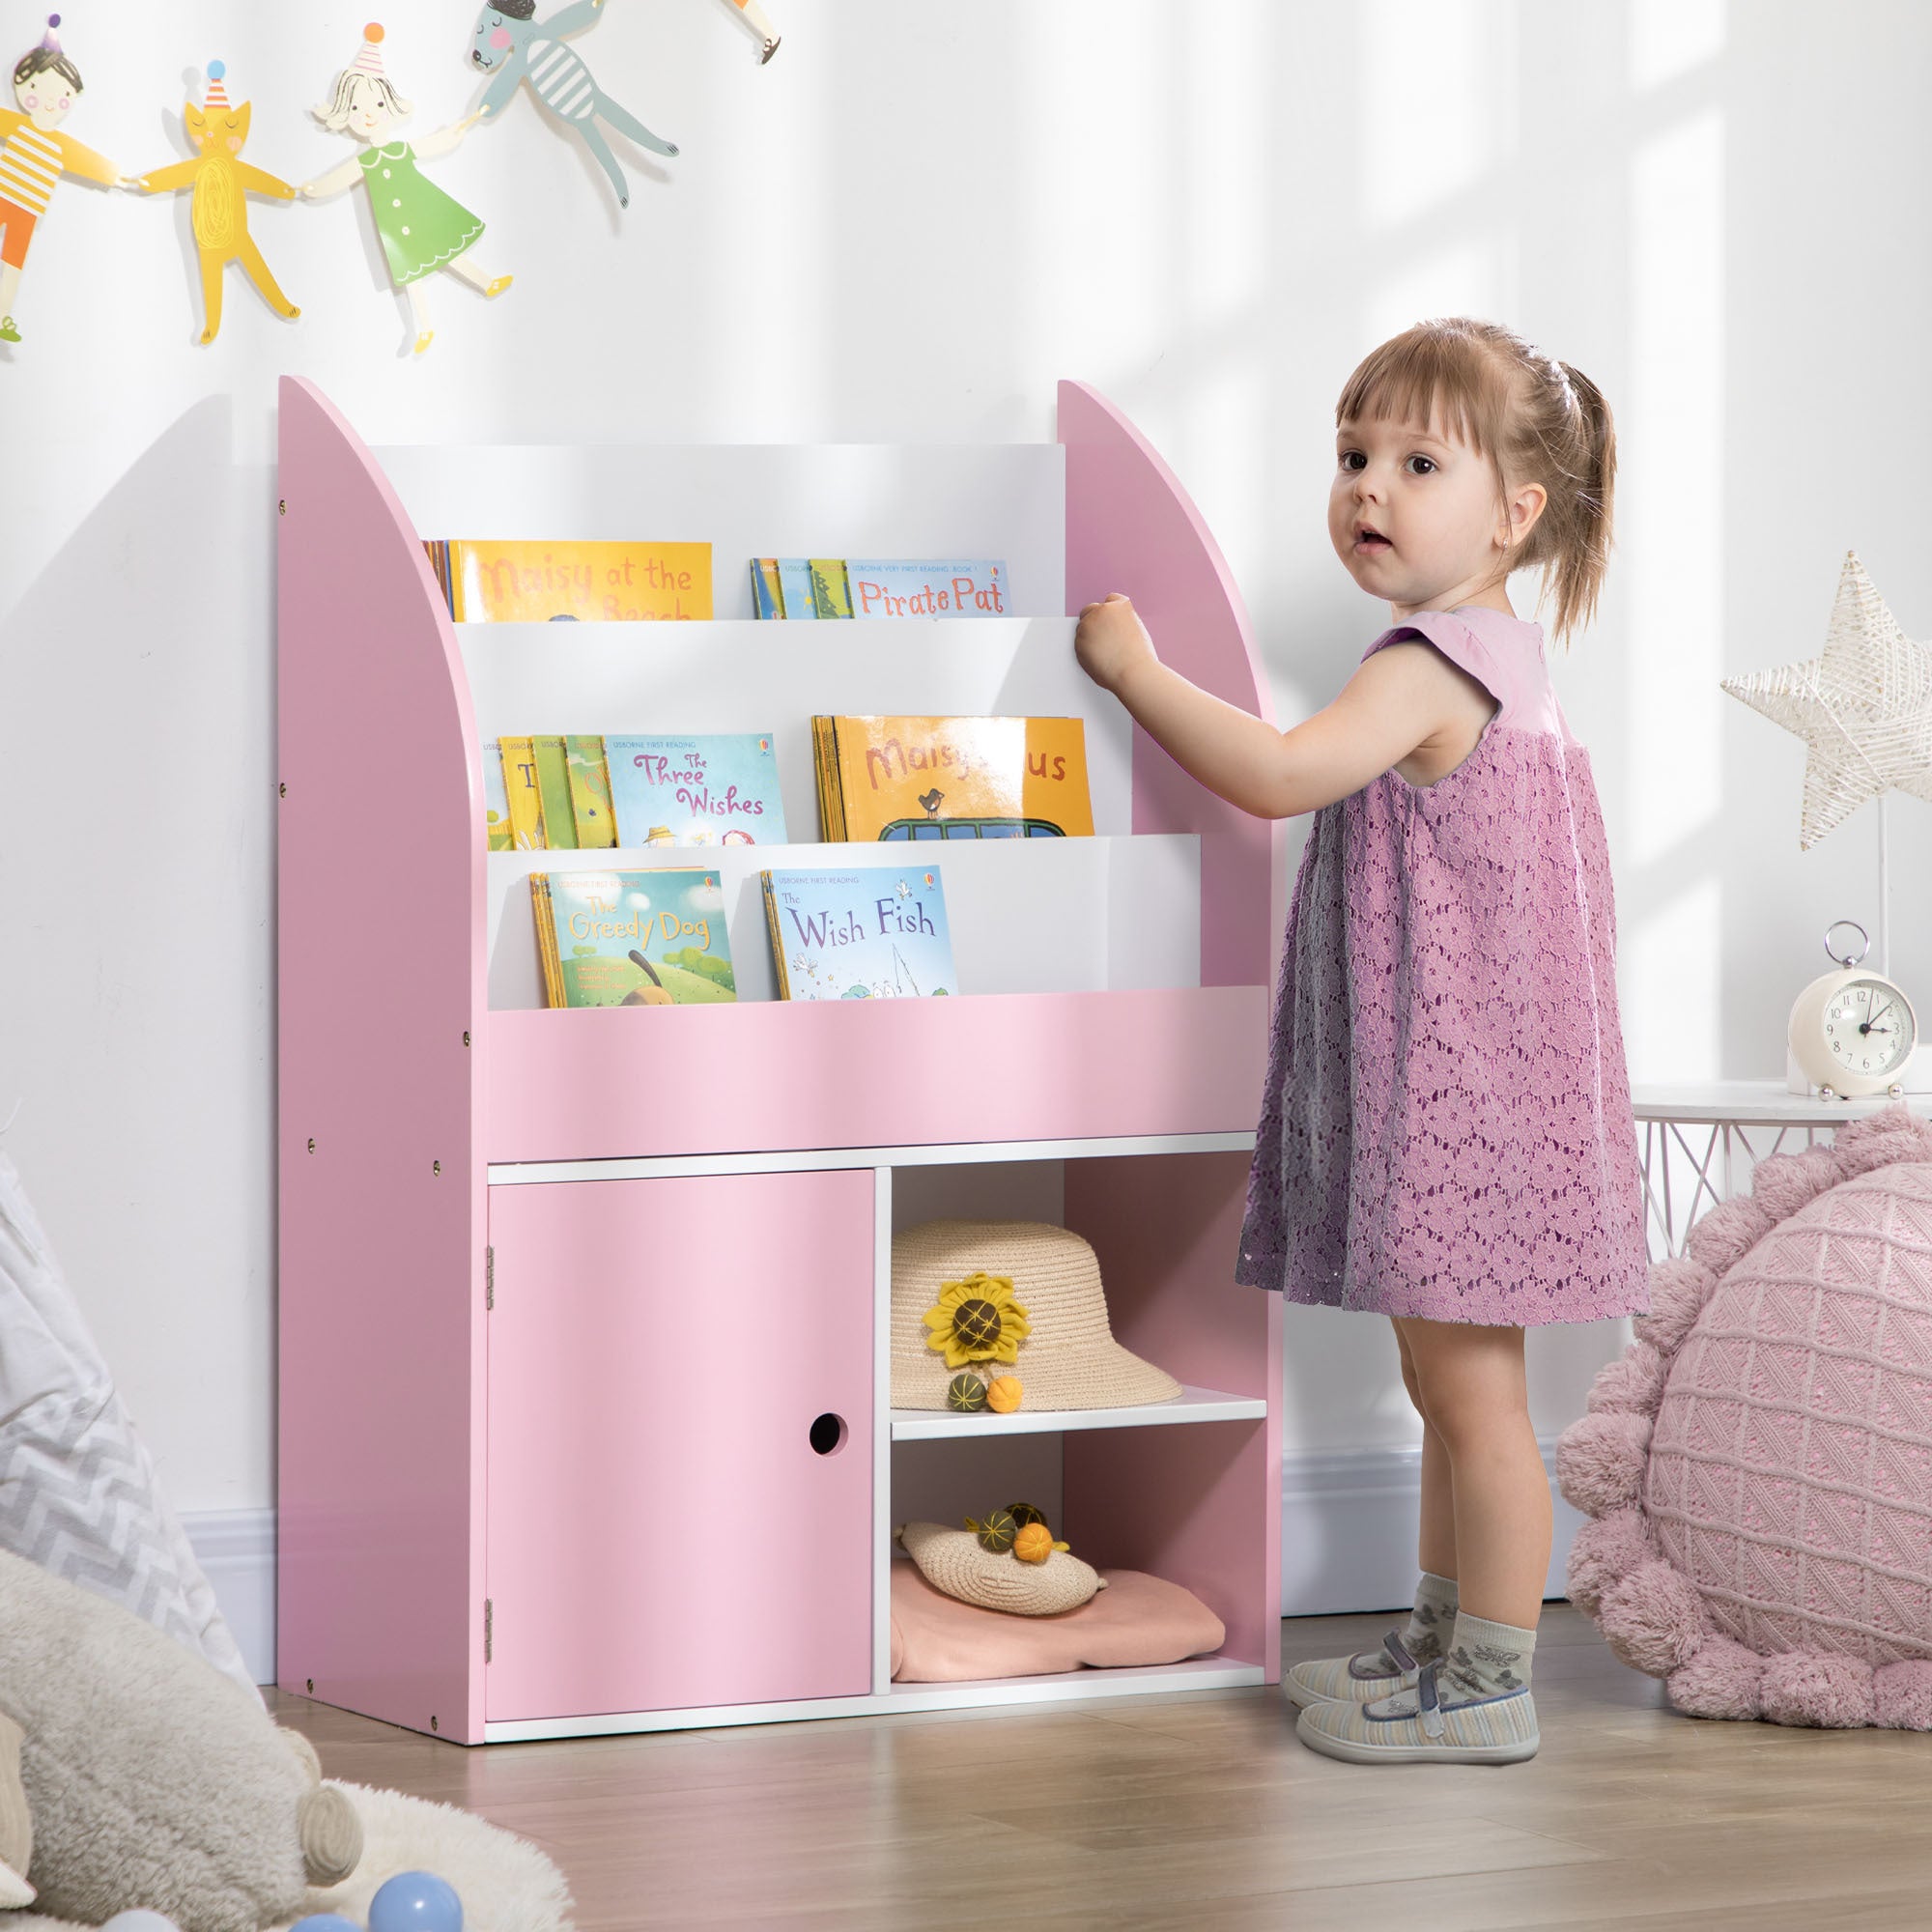 Qaba Bookshelf, Multi Purpose Kids Toy Storage pink-mdf